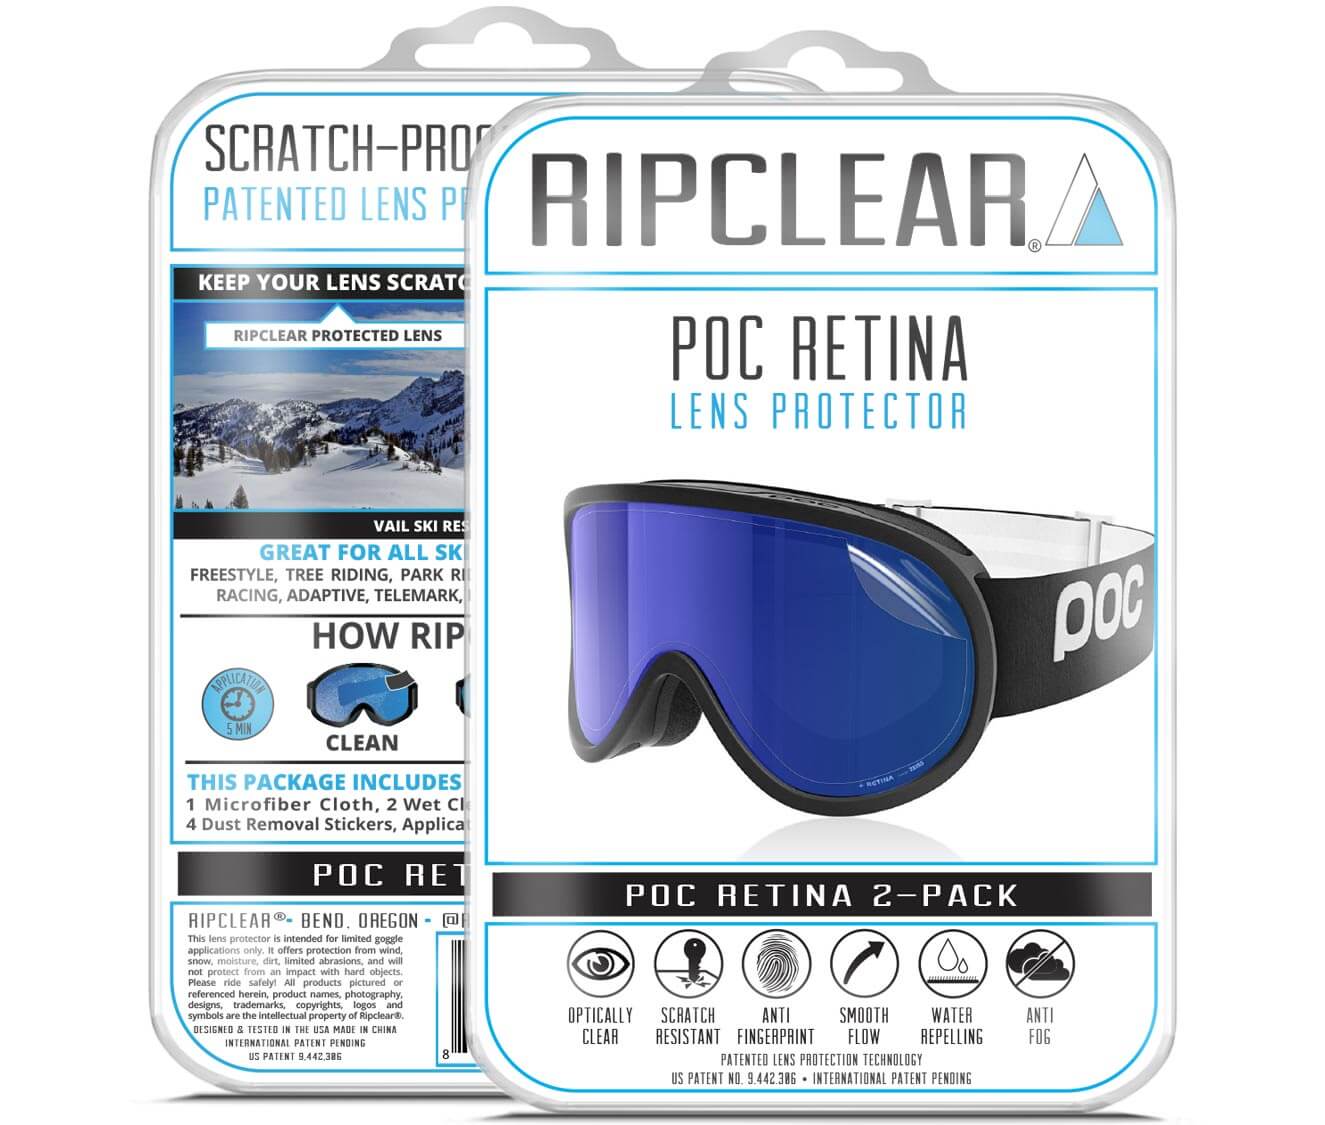 Ripclear Poc Retina Snow Goggle Lens Protector - 2 Pack